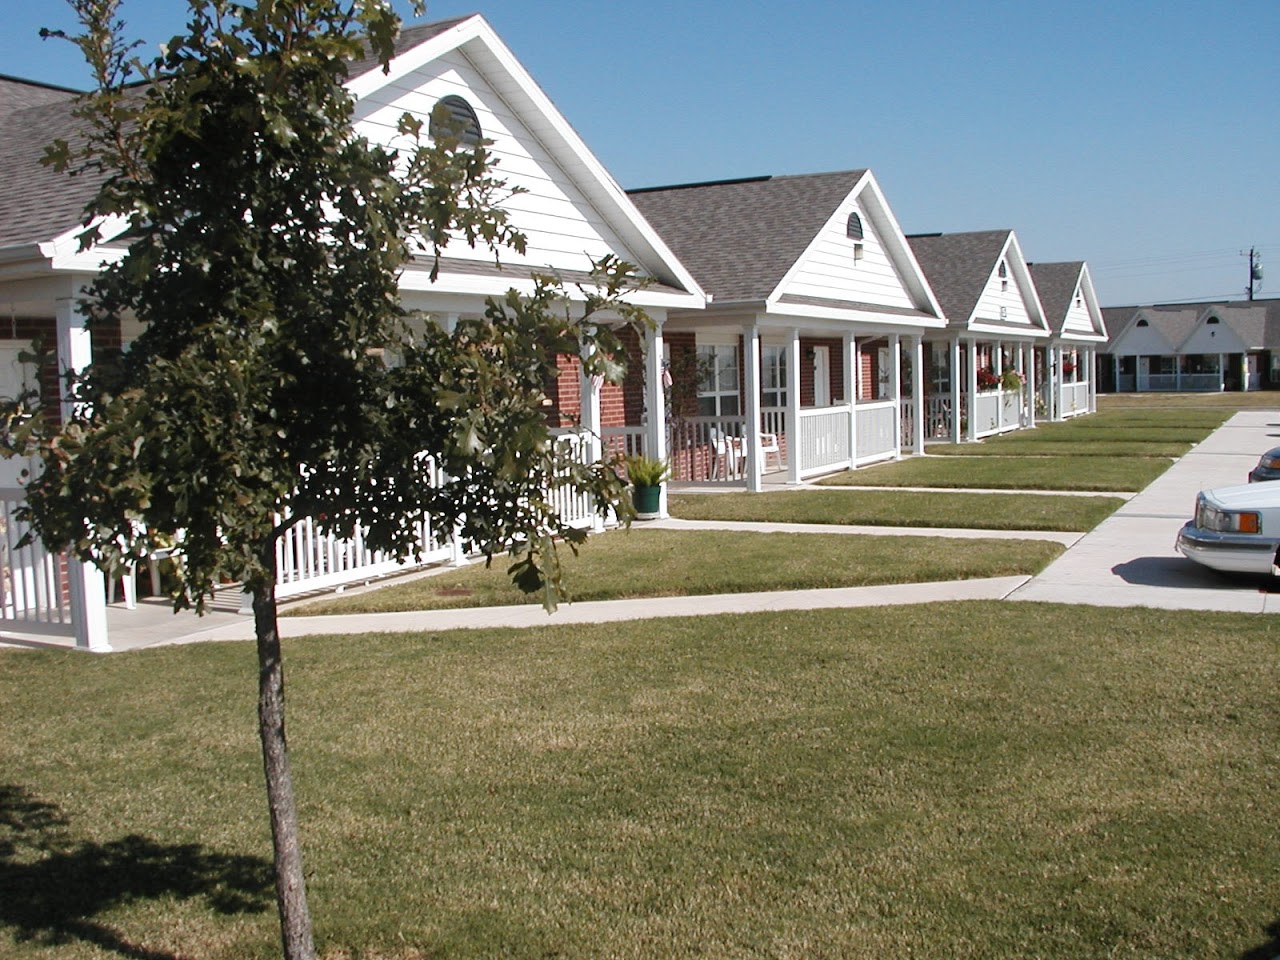 Photo of SETTLEMENT ESTATES SENIOR HOUSING. Affordable housing located at 149 SETTLEMENT DR BASTROP, TX 78602